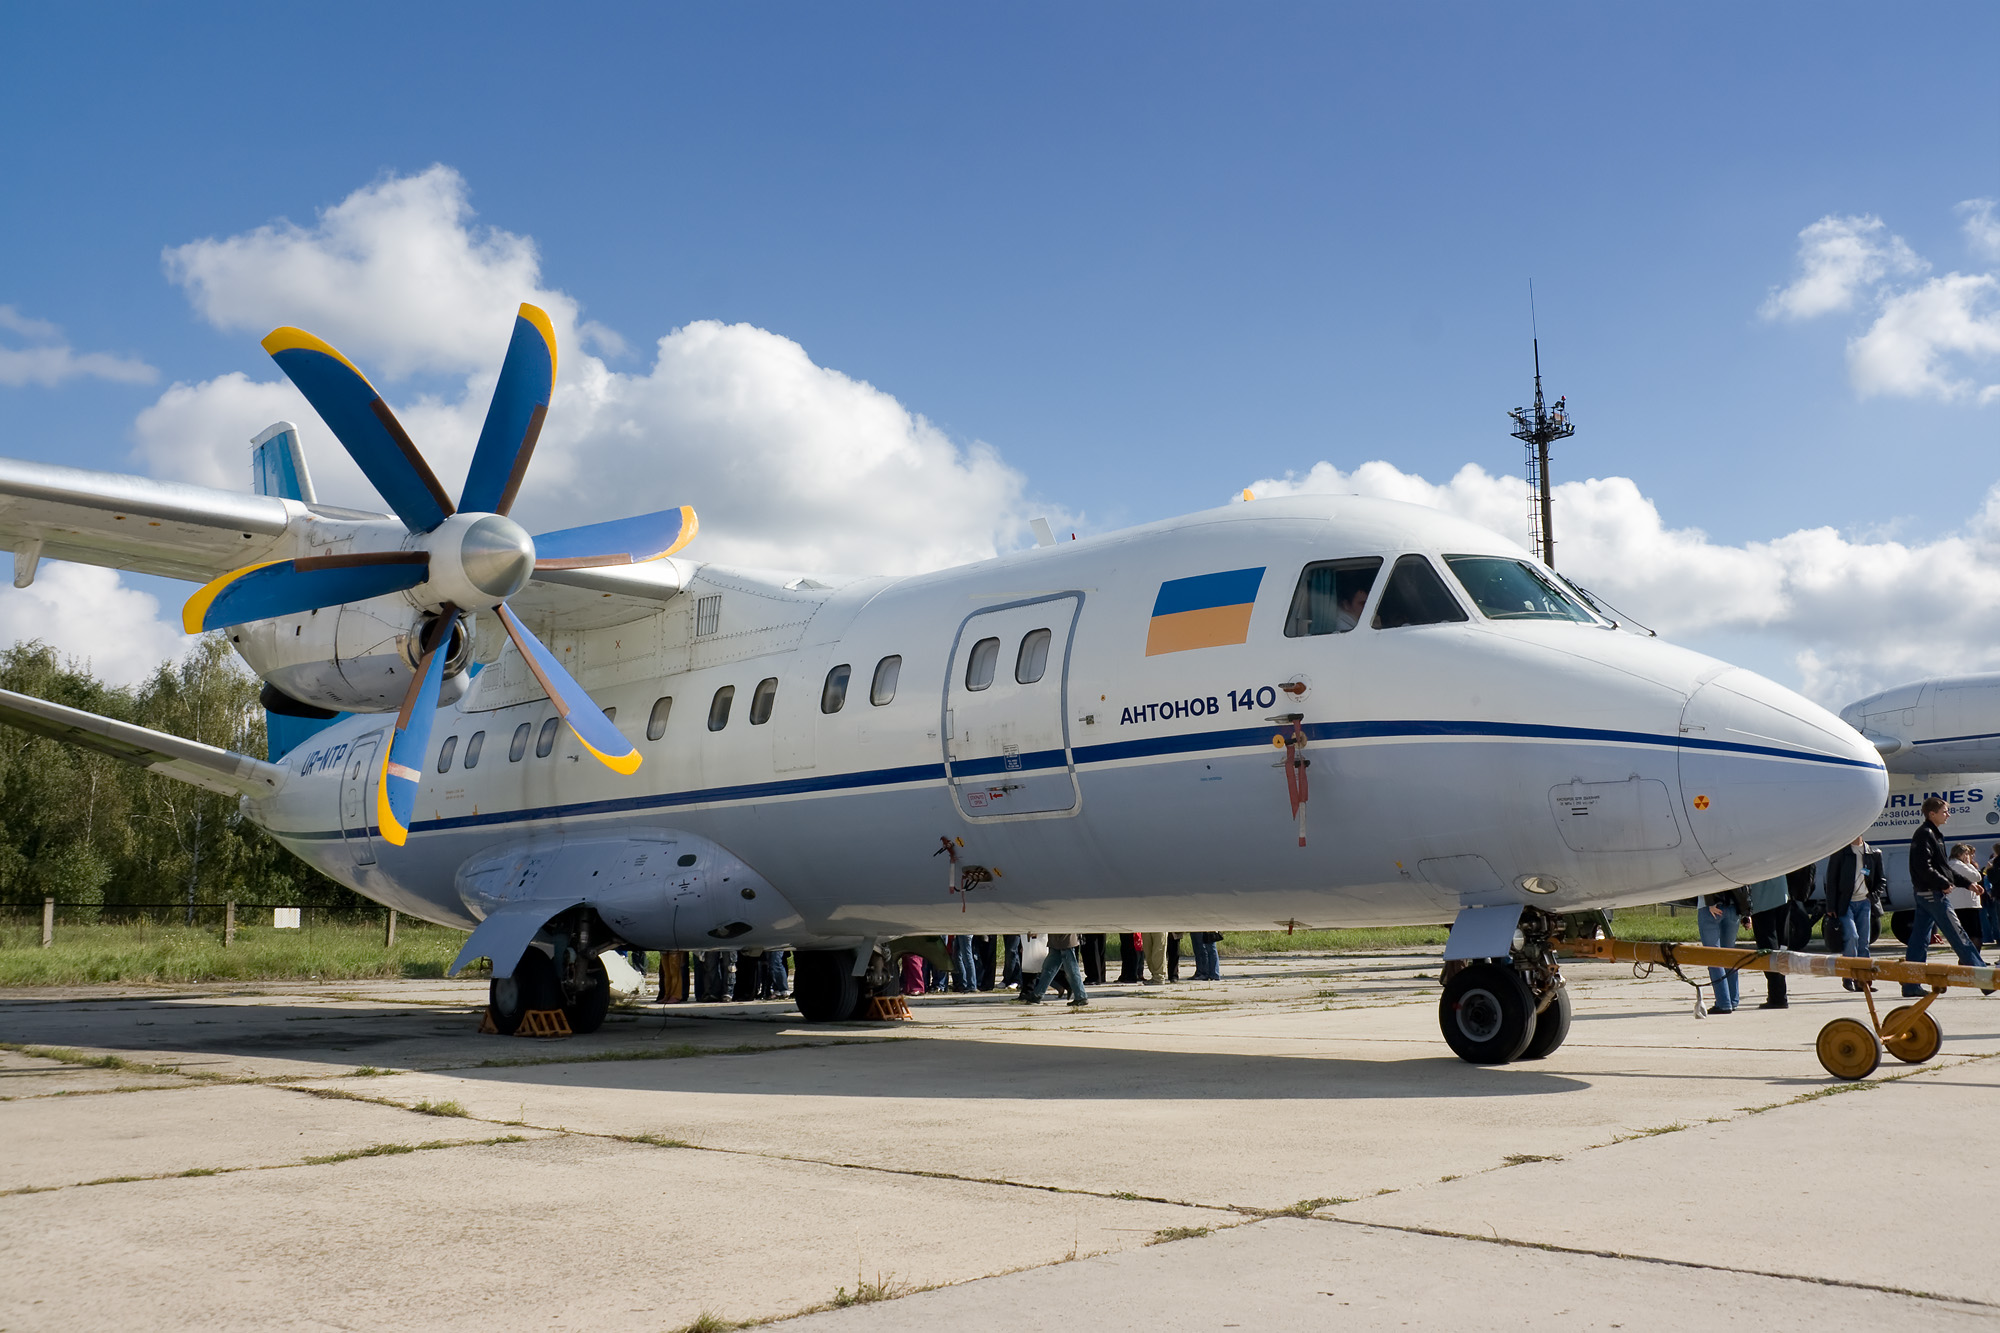 Antonov An-140 #01